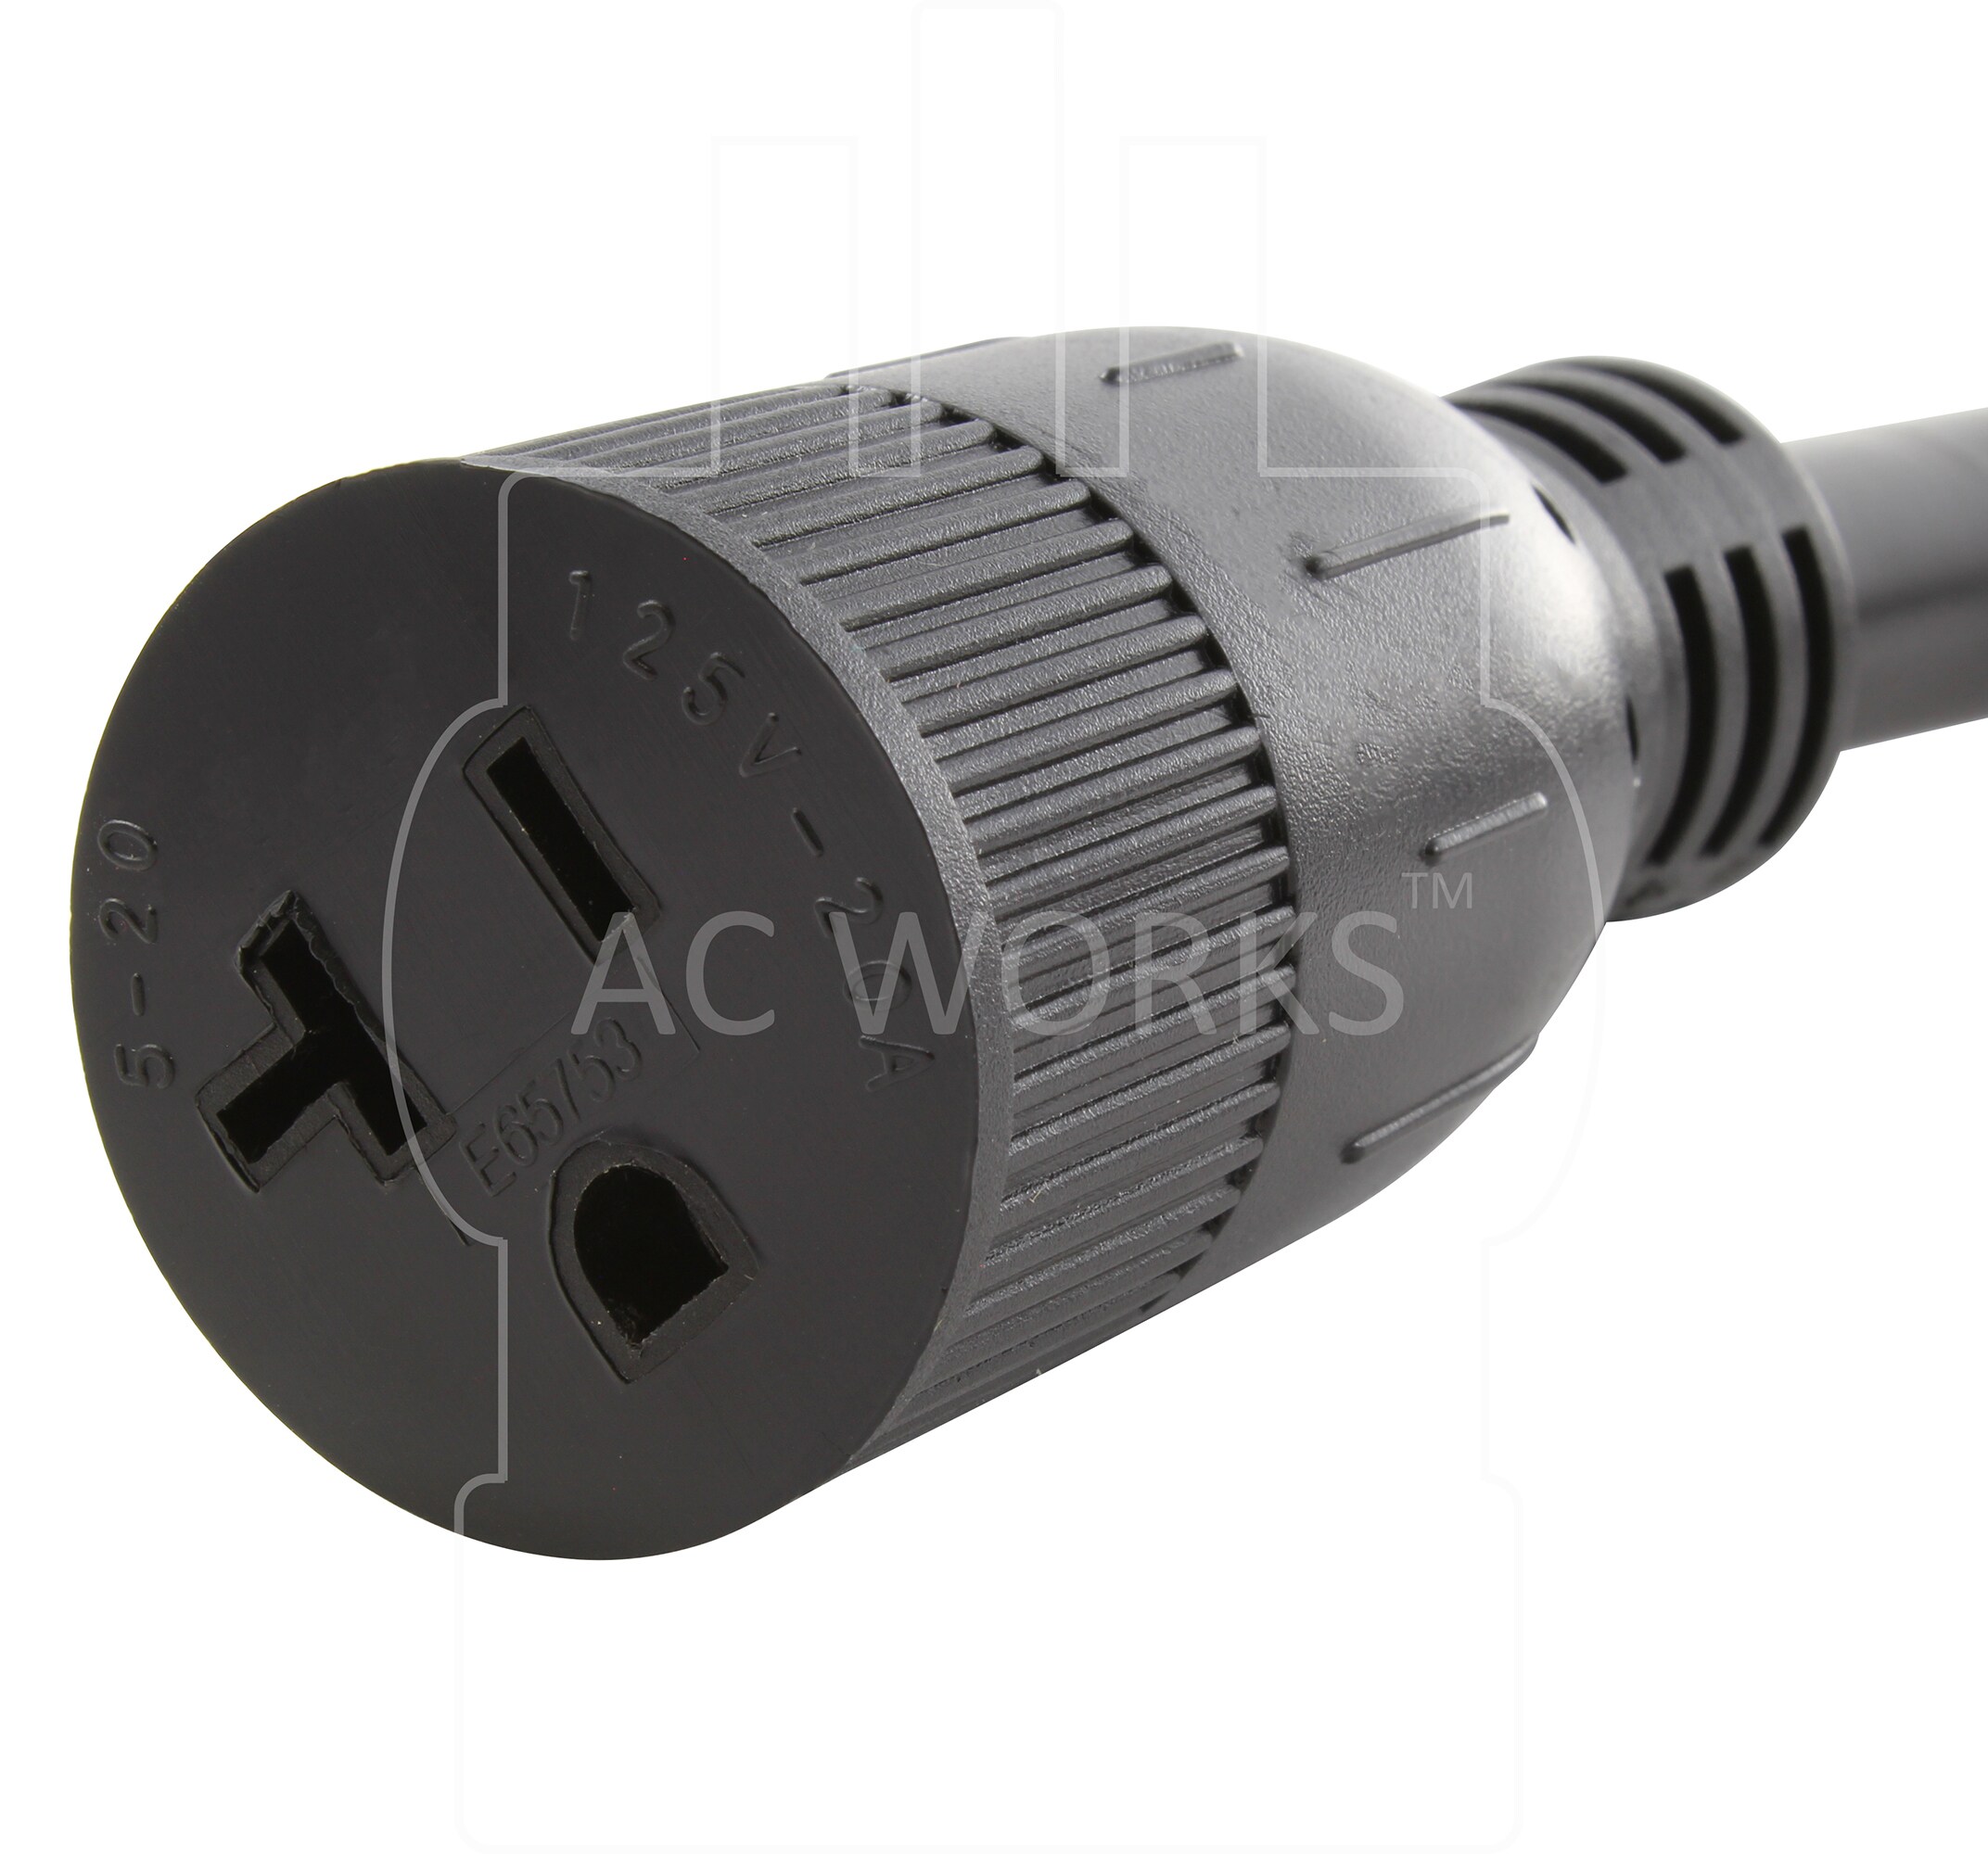 AC Connectors IR-11A Plug Adapter, Socket U.S, 3 Prong, 15 Amp to 20 Amp